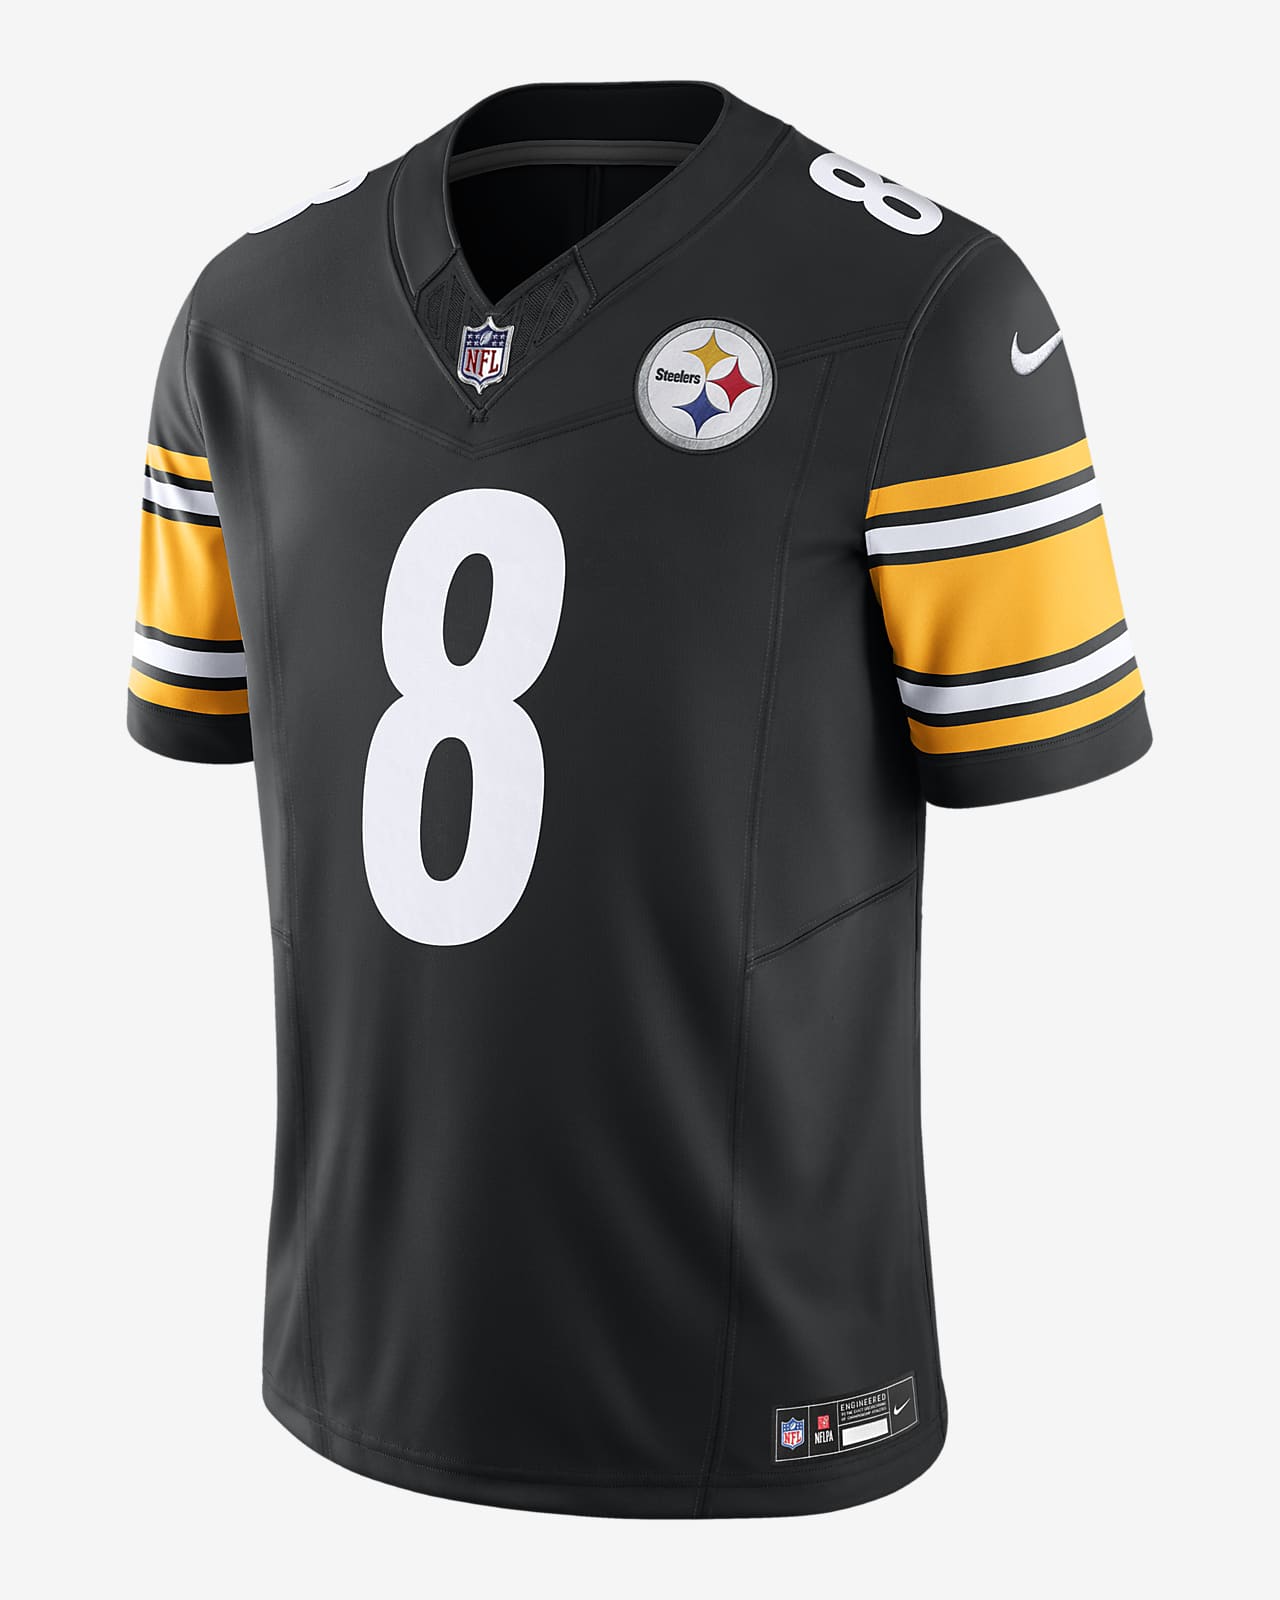 Kenny Pickett Pittsburgh Steelers Men's Nike Dri-FIT NFL Limited Football Jersey